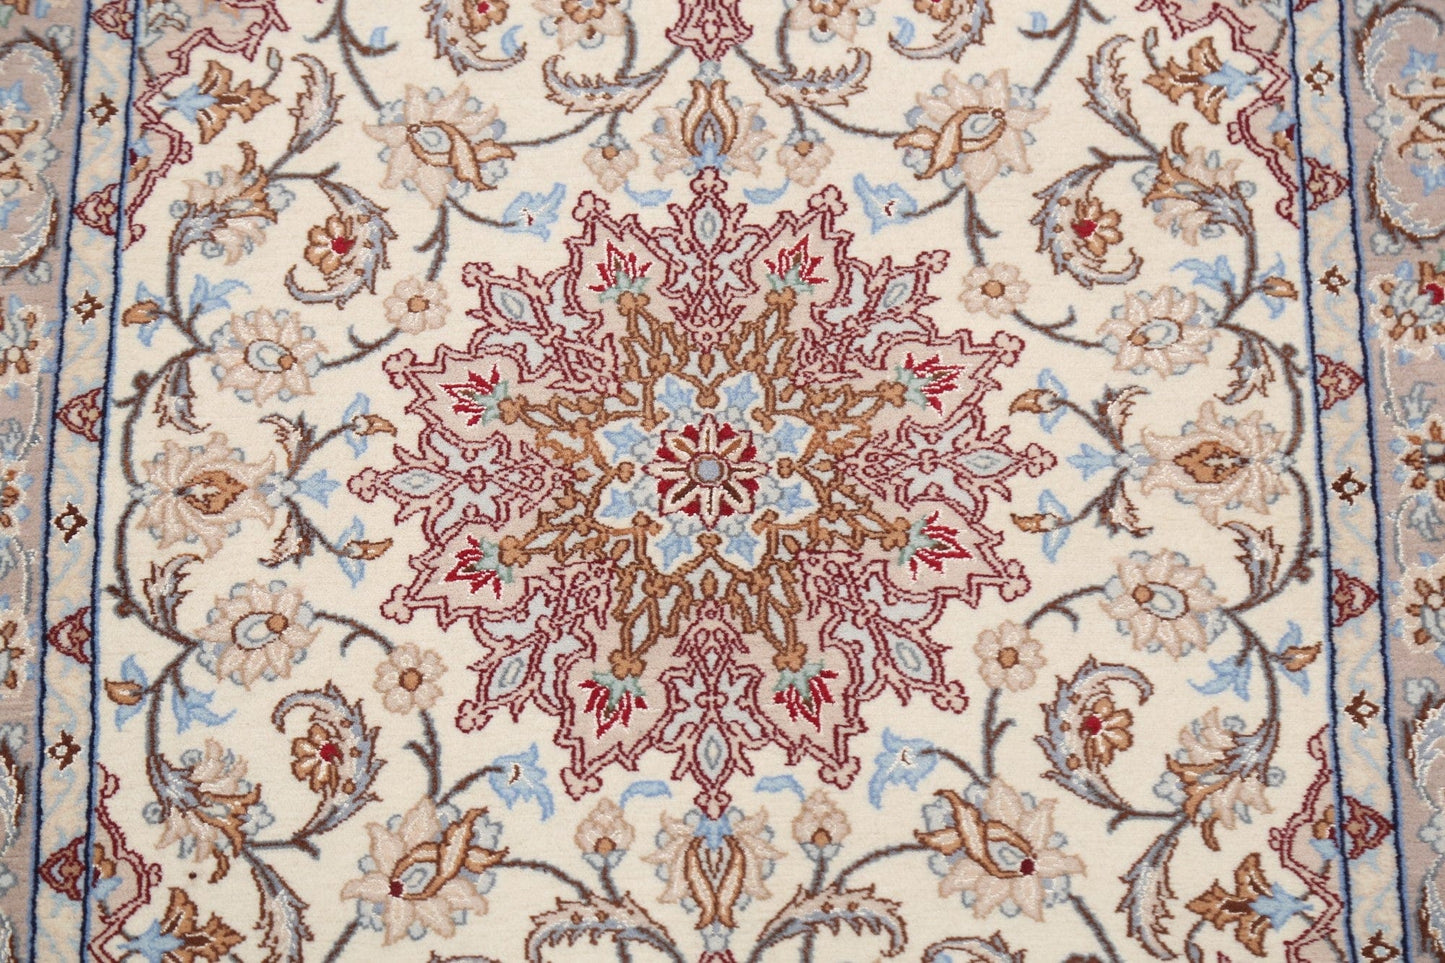 Vegetable Dye Wool/ Silk Floral Isfahan Persian Area Rug 3x4